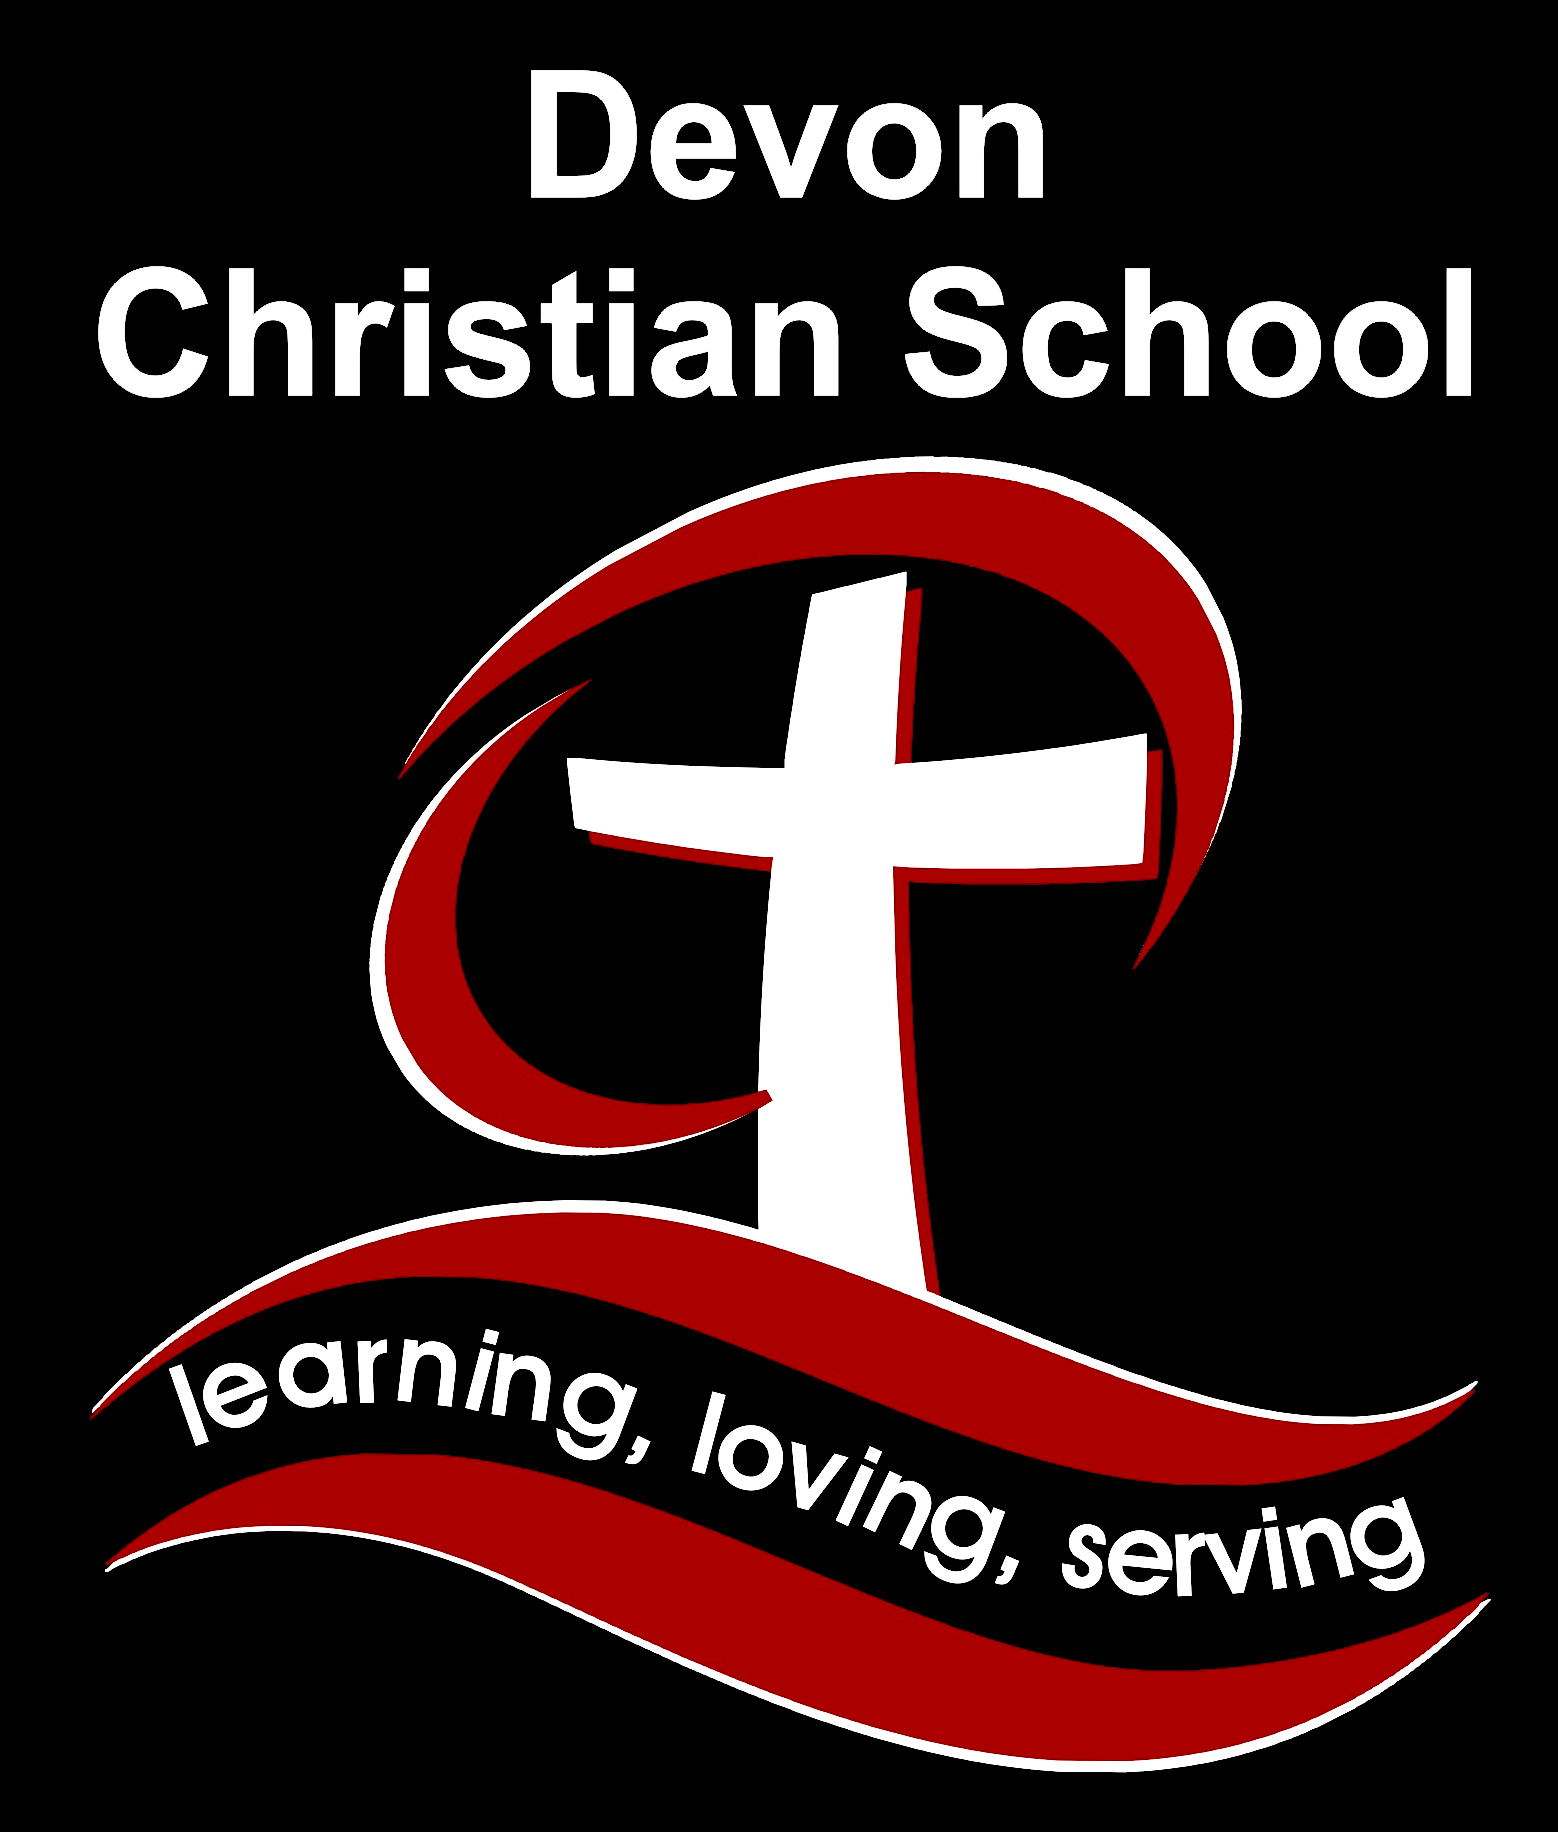 Devon Christian School